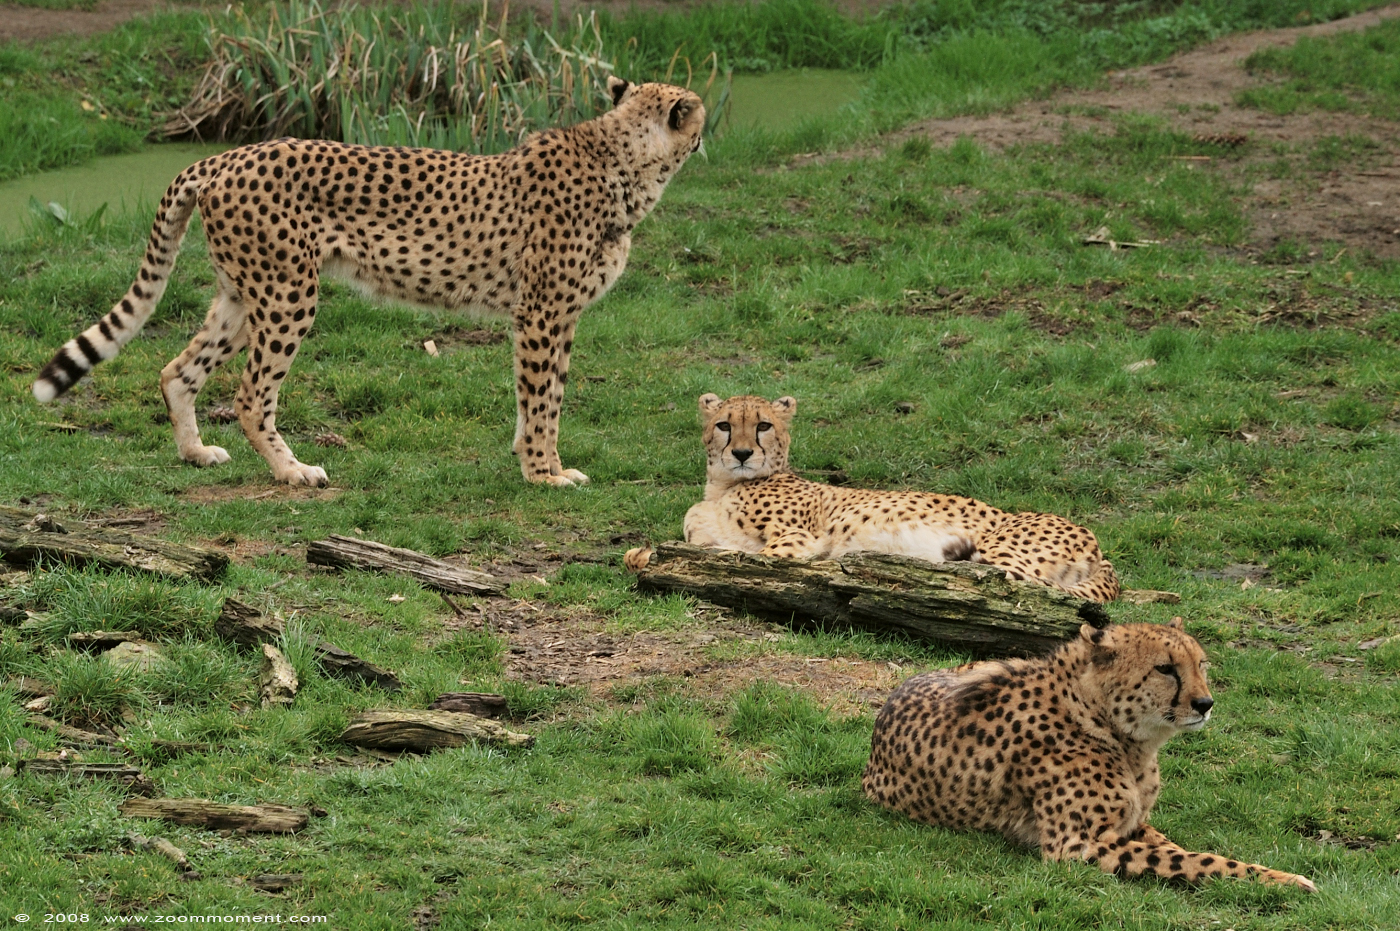 jachtluipaard ( Acinonyx jubatus jubatus ) cheetah
Trefwoorden: Olmen zoo Belgie Belgium jachtluipaard cheetah Acinonyx jubatus